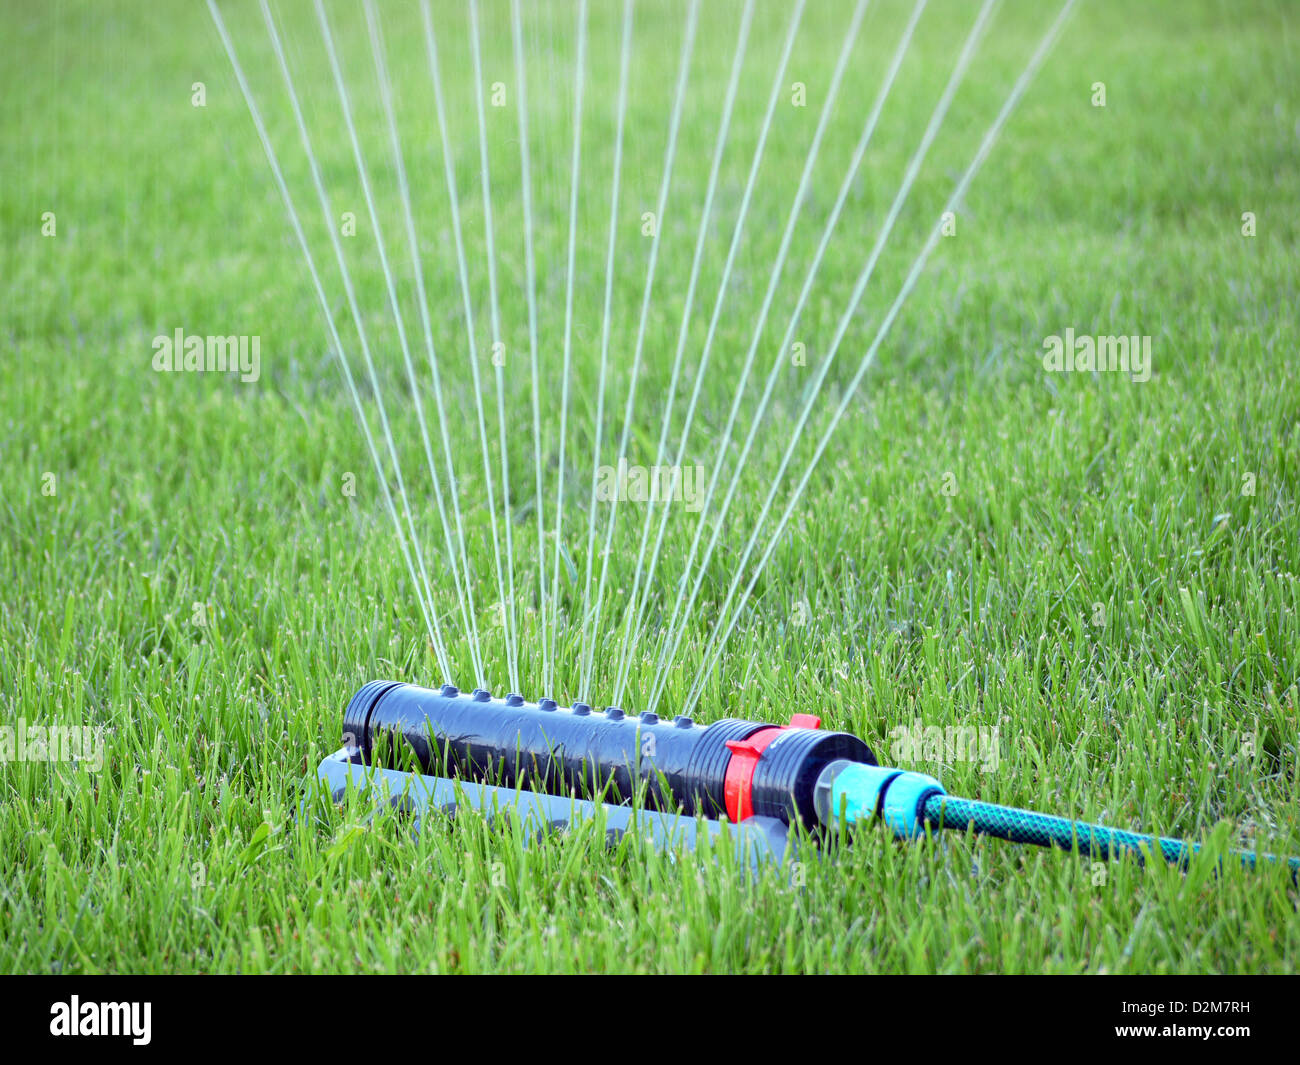 Prato essendo irrigato da impianti sprinkler Foto Stock